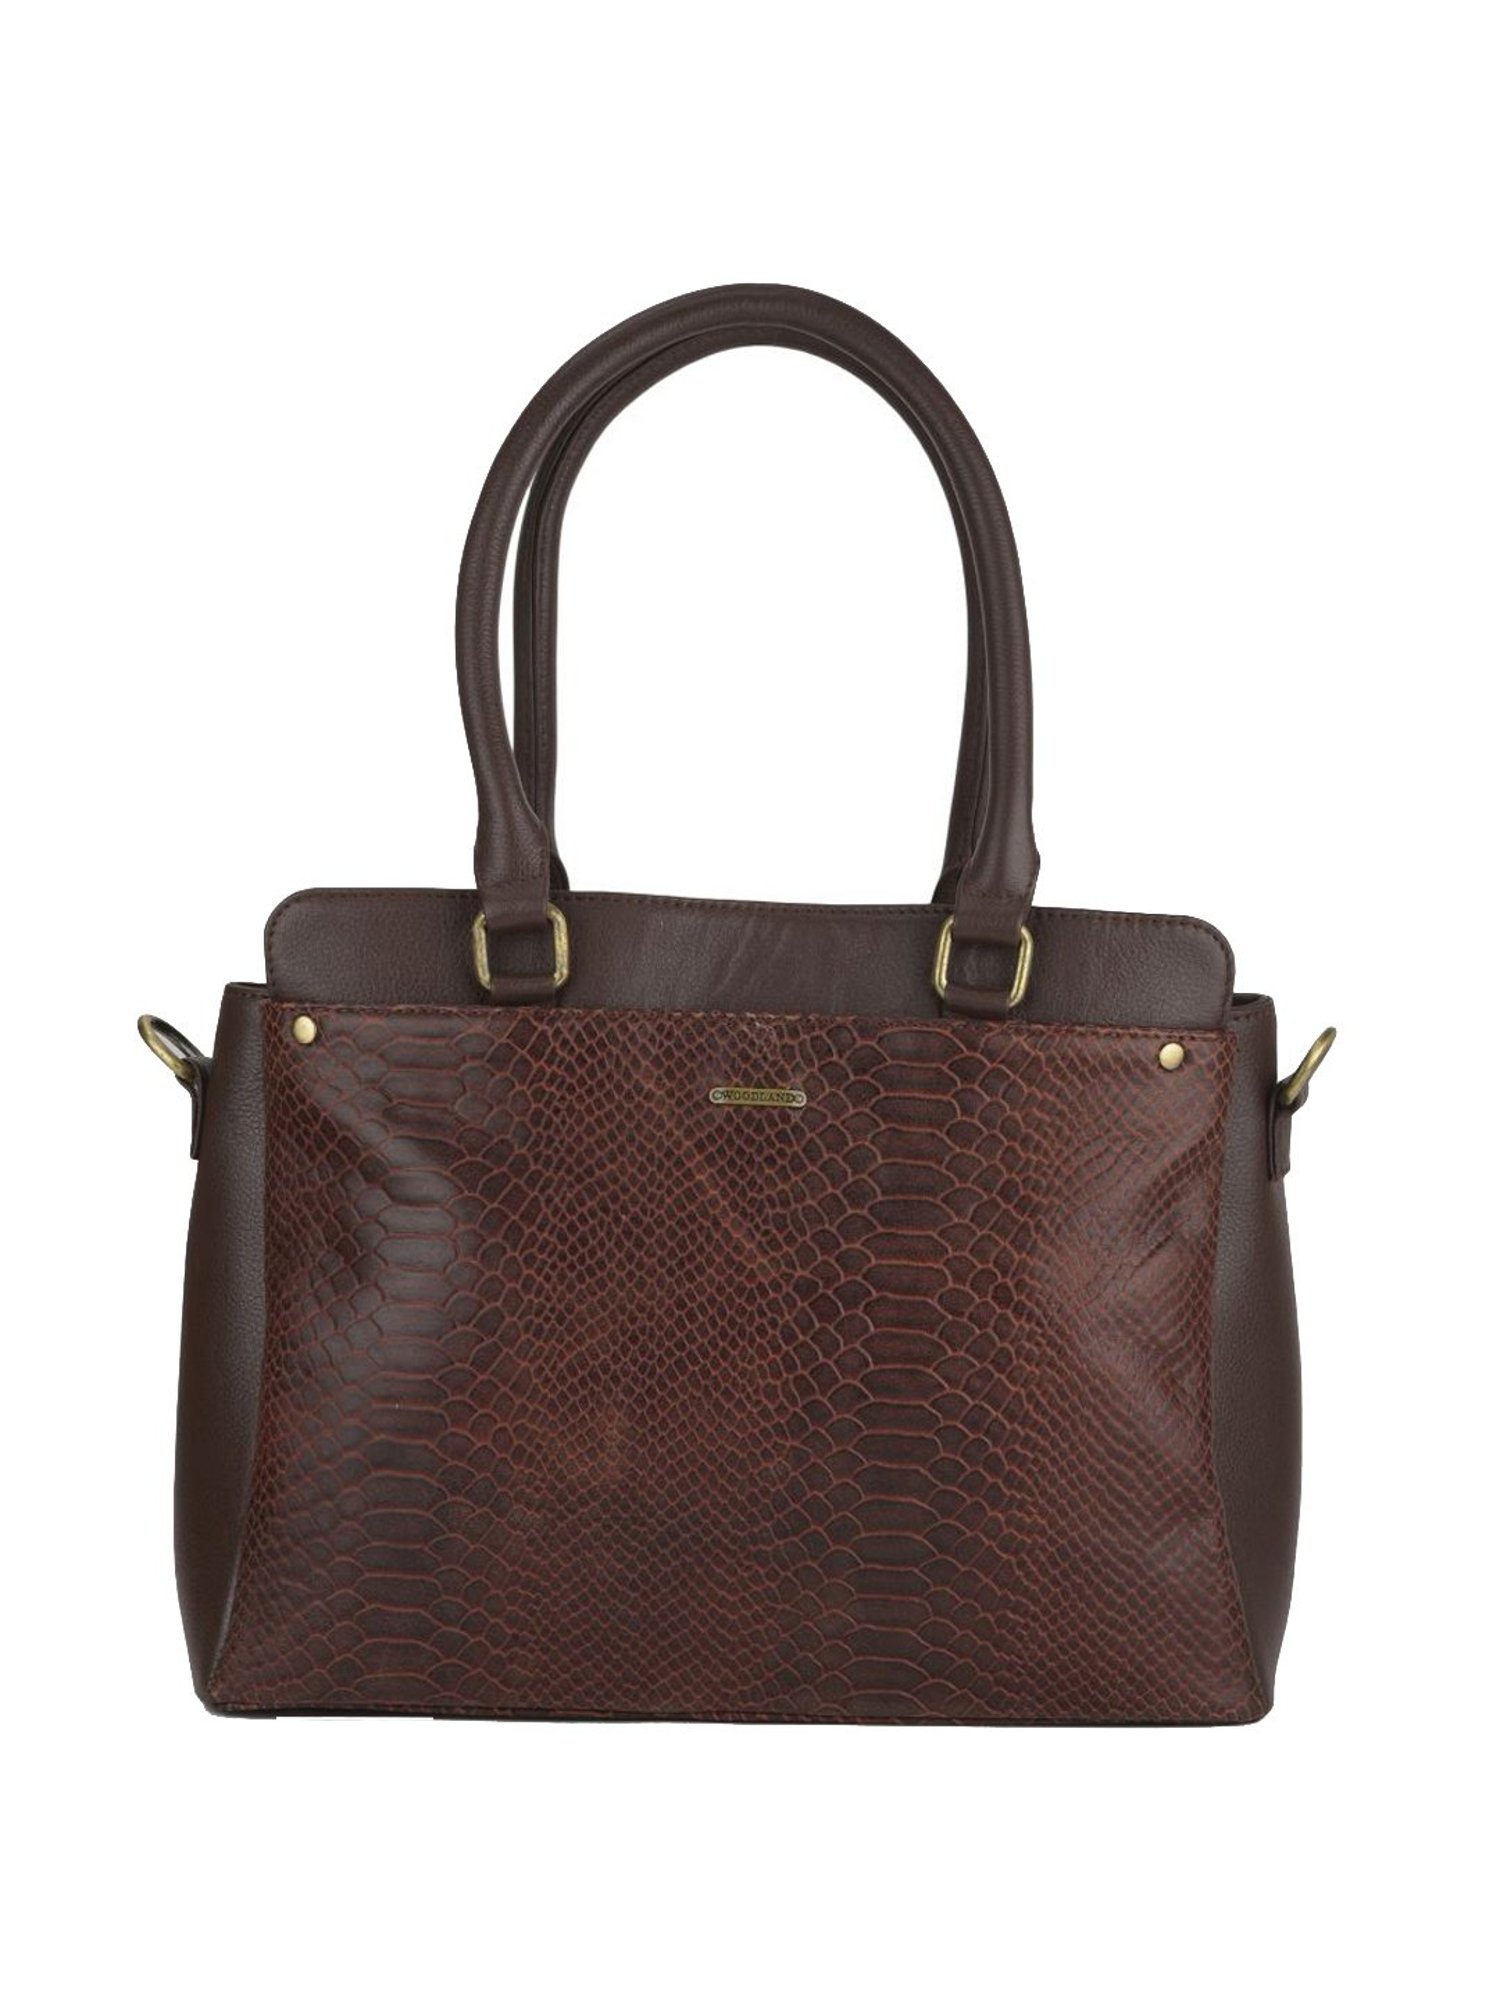 Woodland Bag On Amazon best brand women leather handbag Woodland men's  wallet | Amazon Deal: किसी को भी गिफ्ट करें ये Woodland Handbag, पसंद आने  की गारंटी है